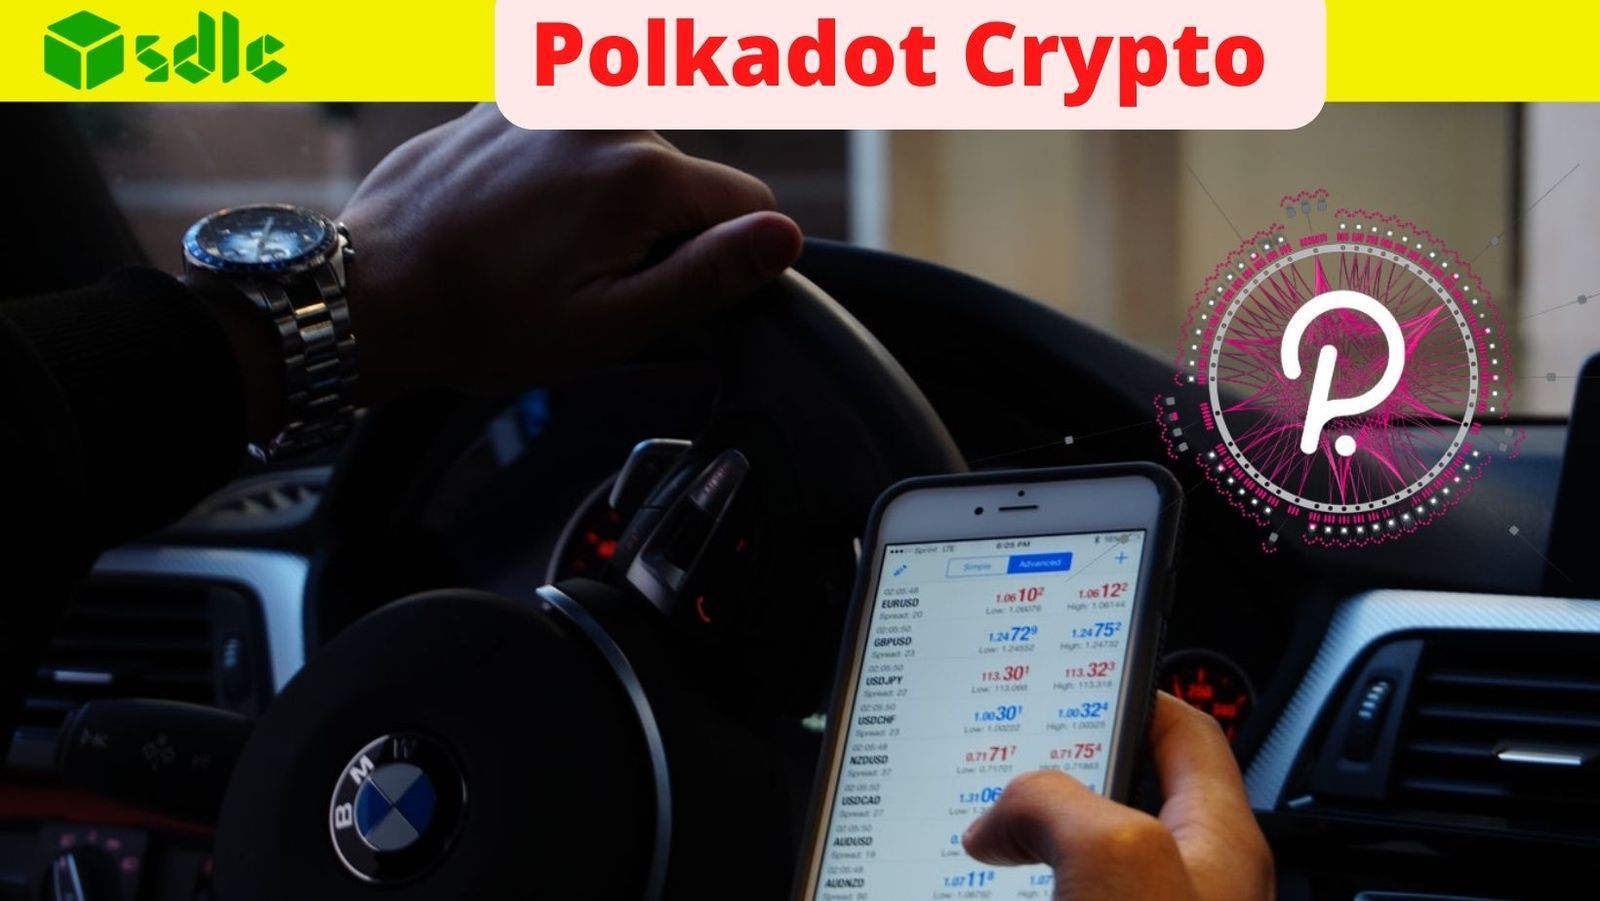 What is Polkadot Crypto in Blockchain Platform?